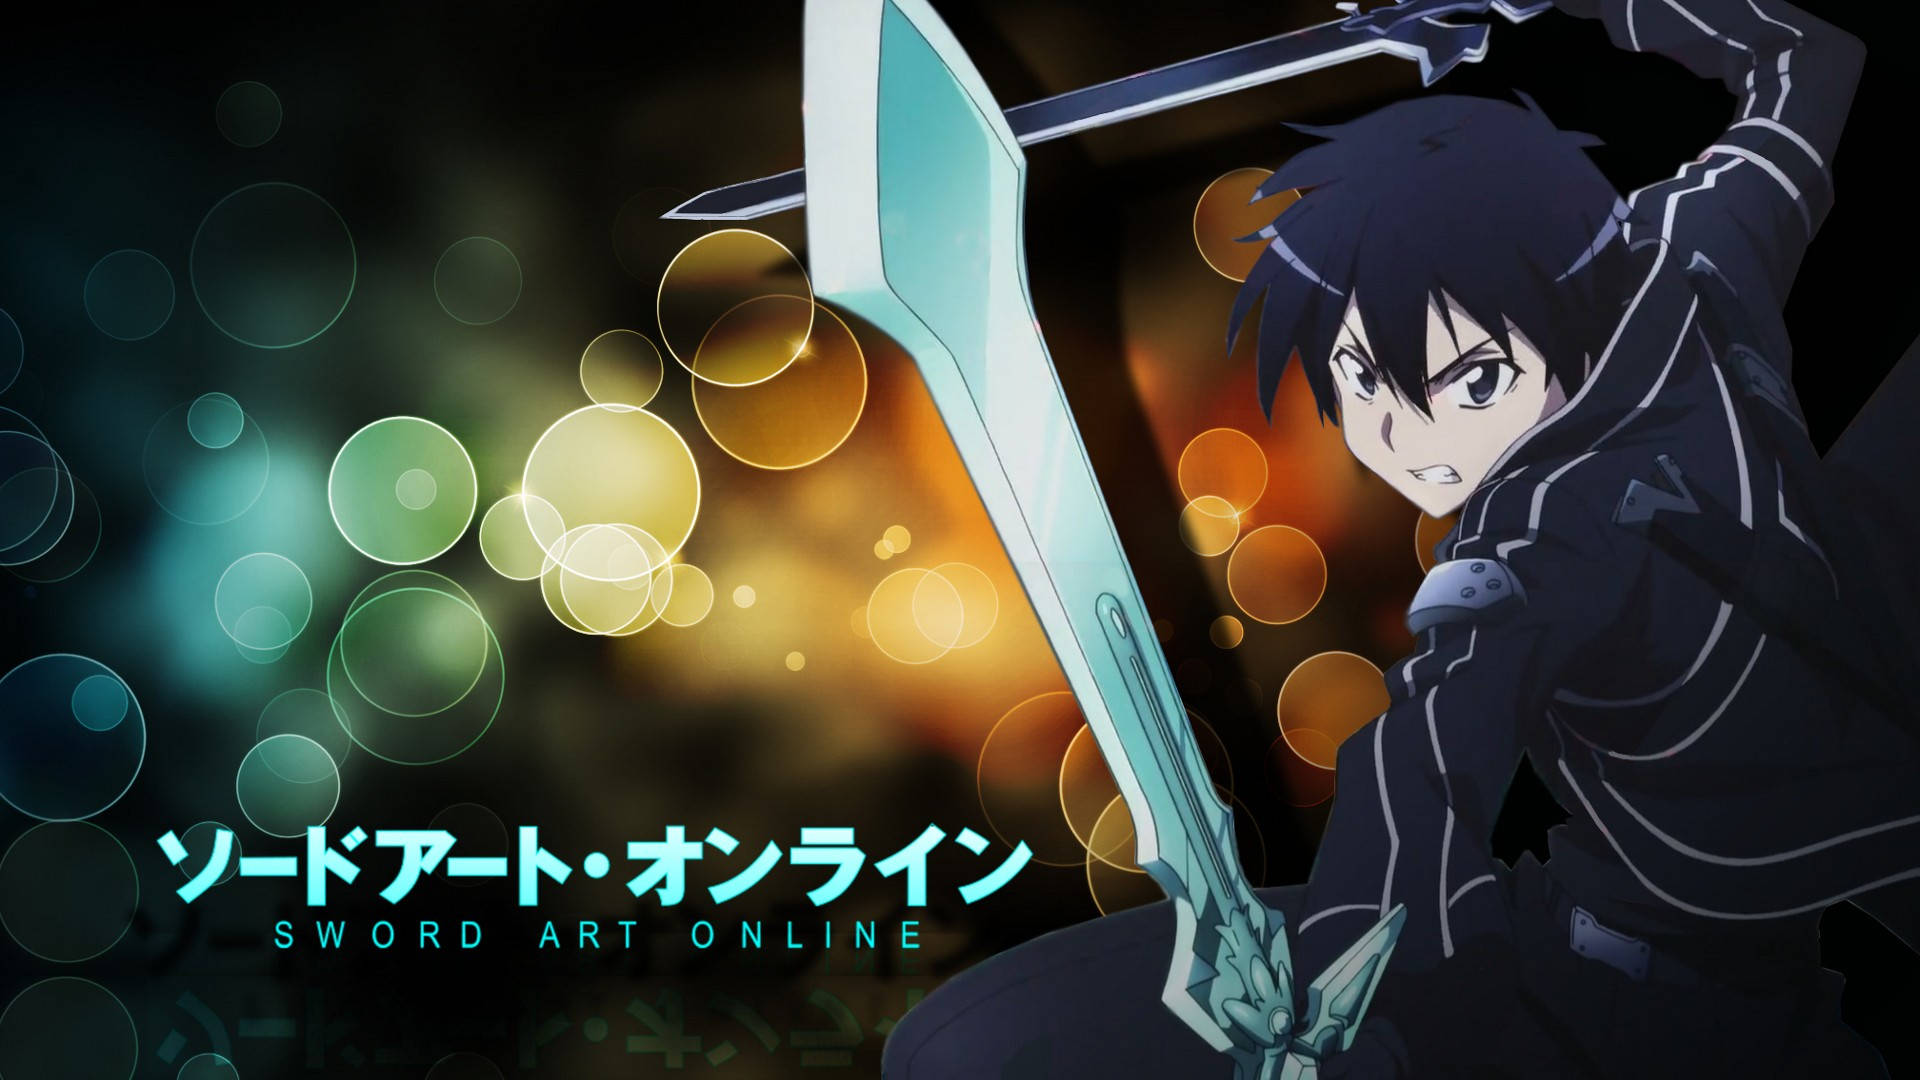 Personajede Anime Kirito Fondo de pantalla